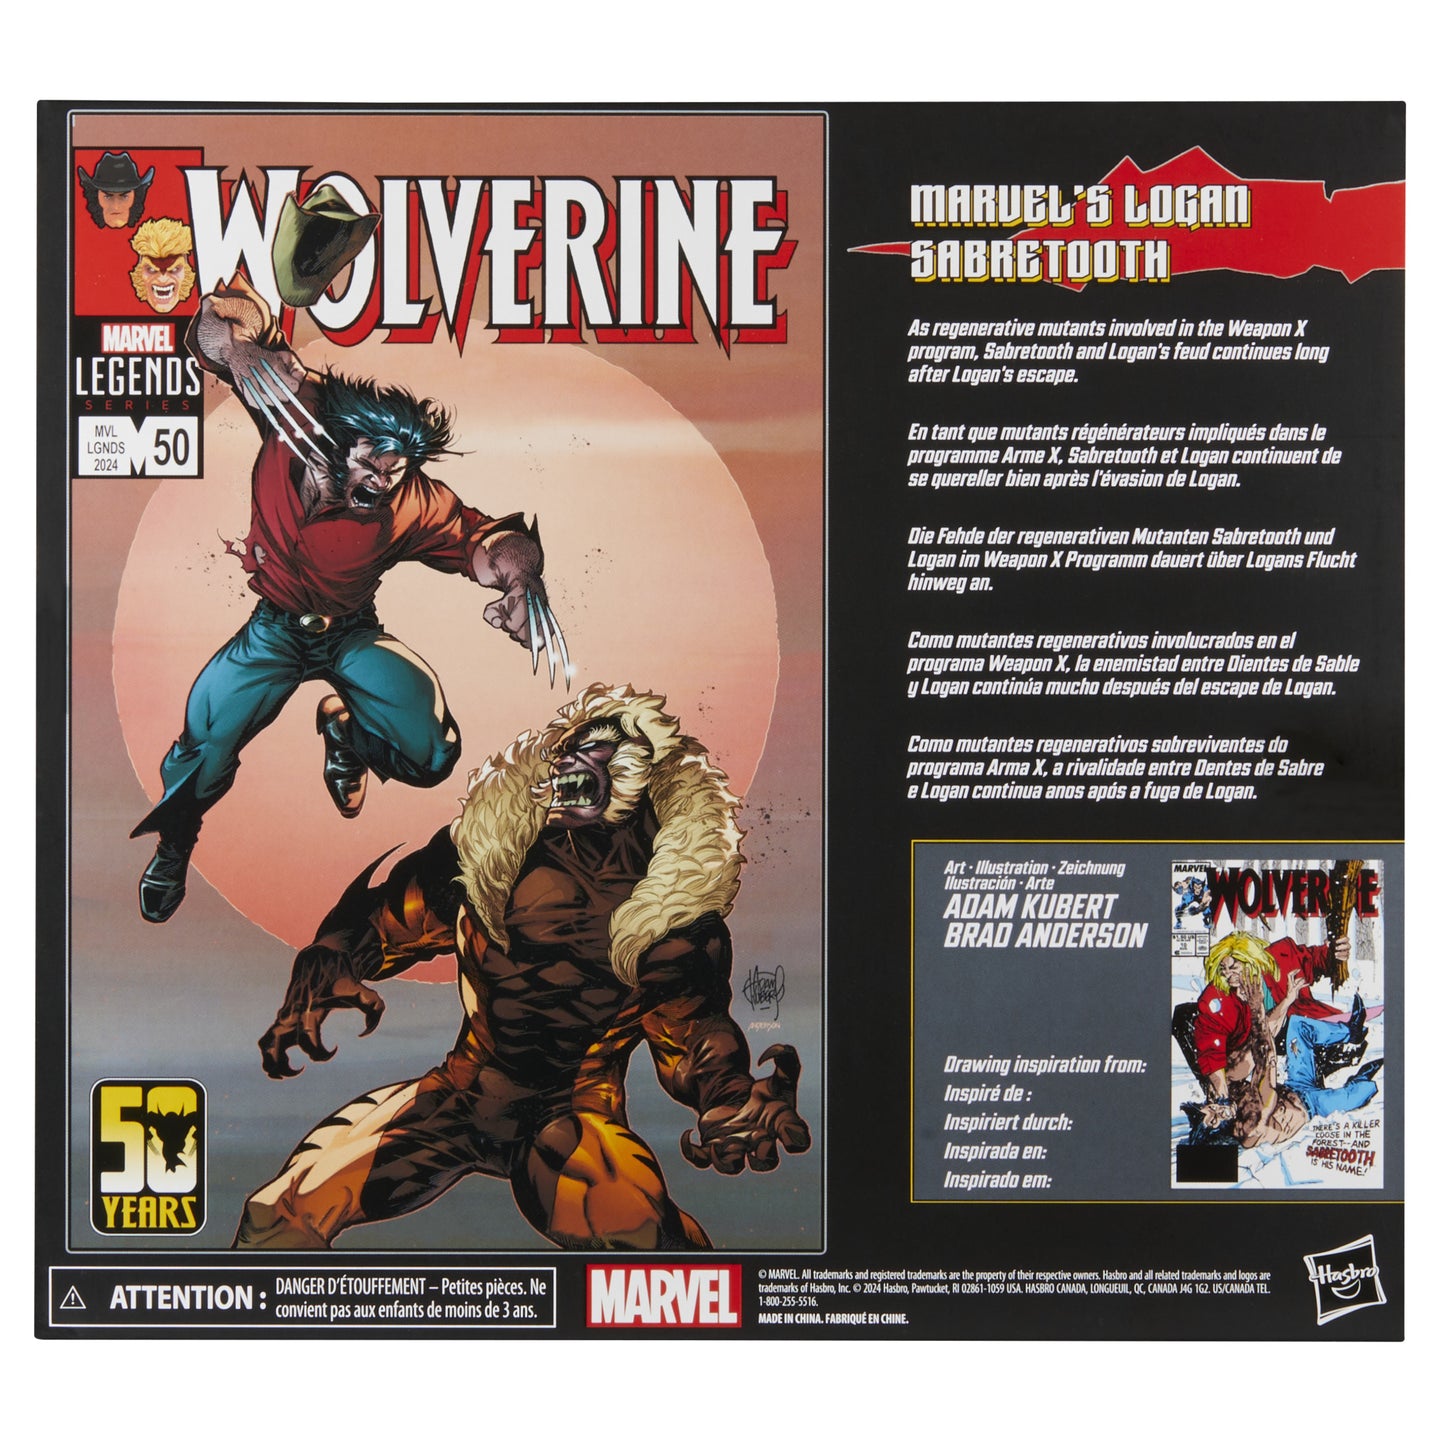 (PRE-ORDER) Marvel Legends - 50th Anniversary Wolverine vs Sabretooth - 6 inch Action Figures 2 Pack